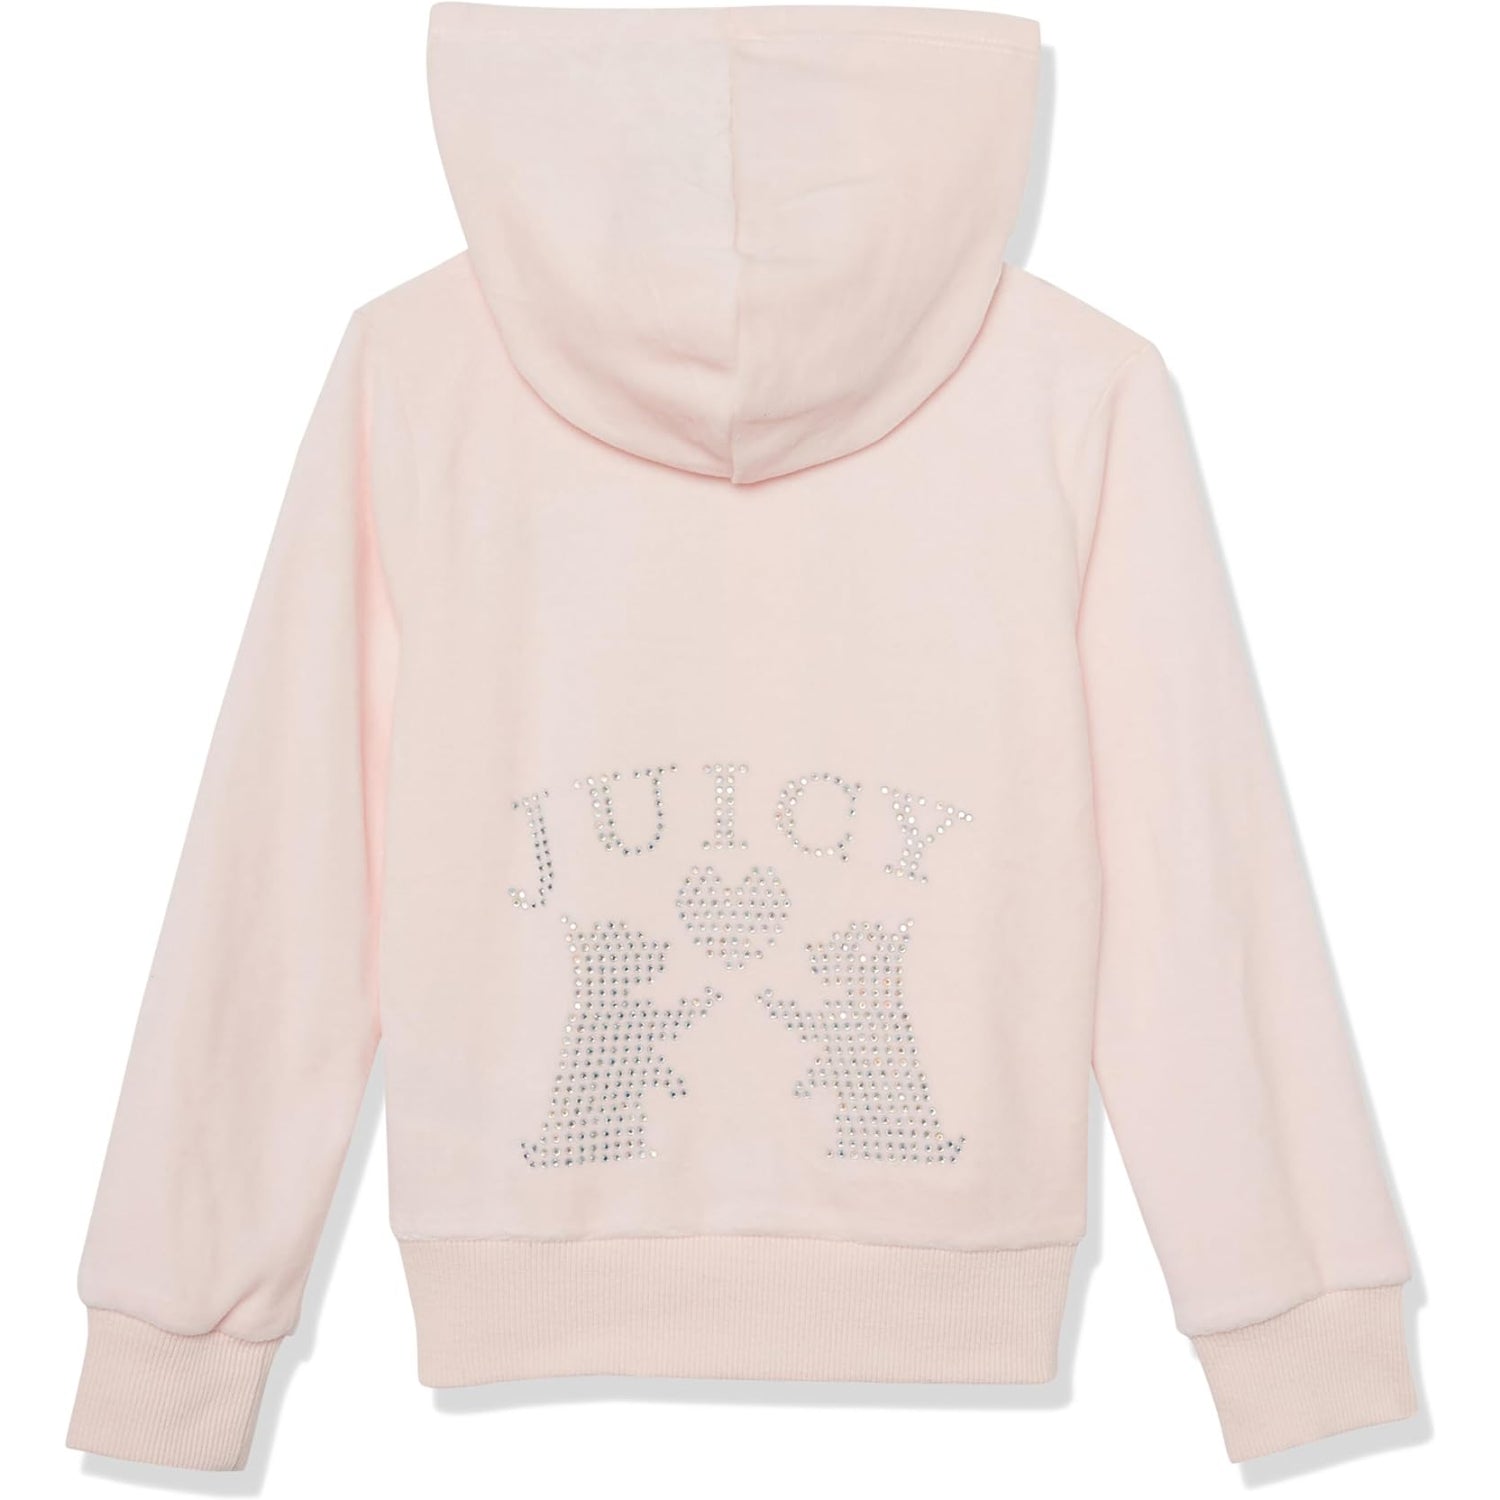 Juicy Couture Girls 2T-4T Velour Zip Front Jogger Set